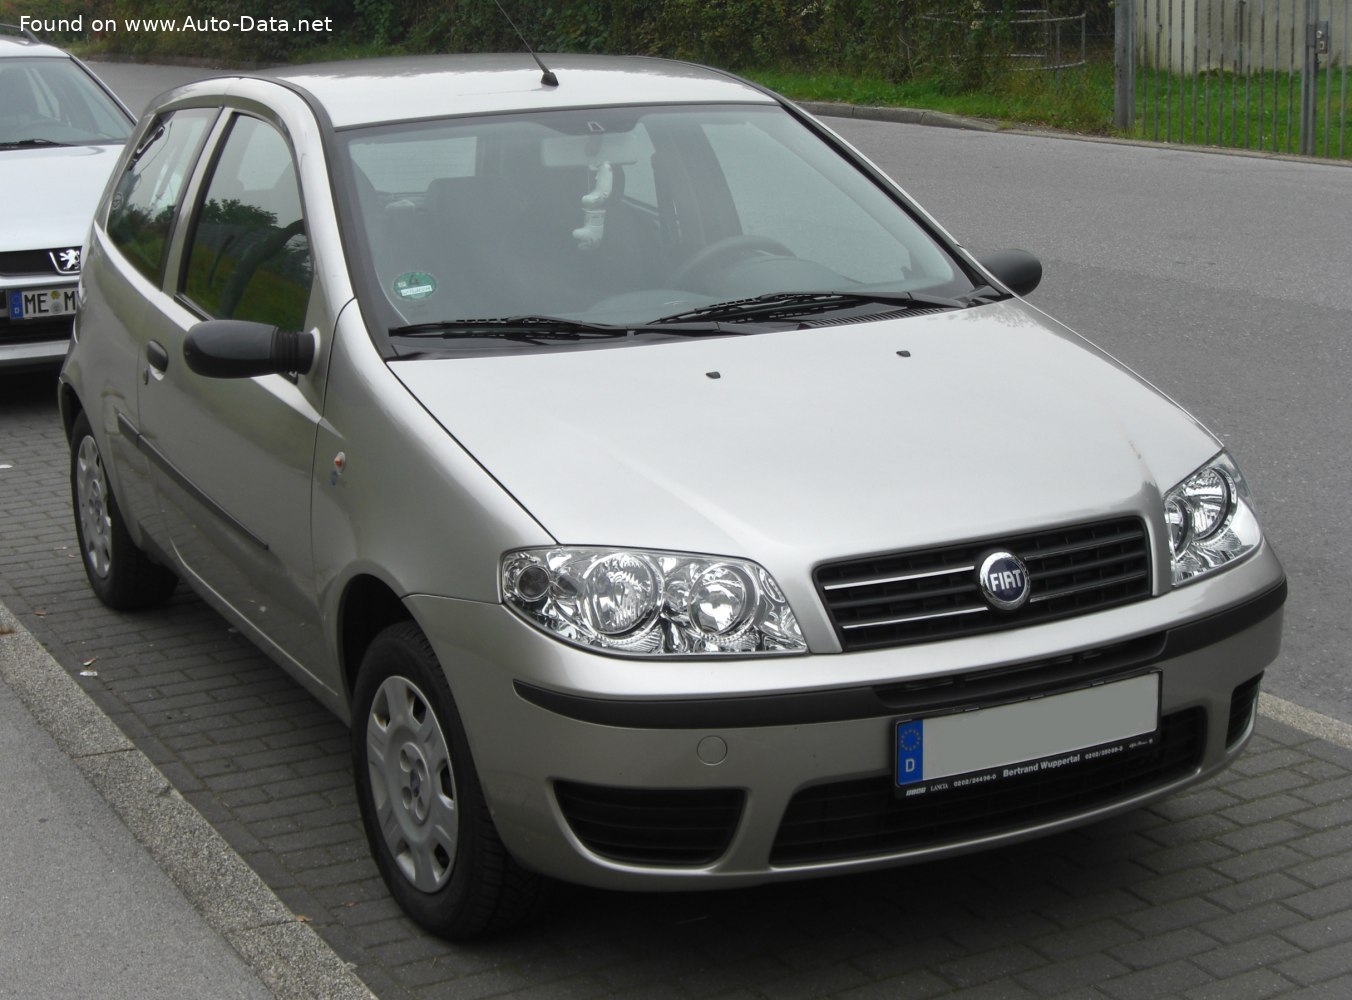 https://www.auto-data.net/images/f39/Fiat-Punto-II-188-facelift-2003-3dr.jpg